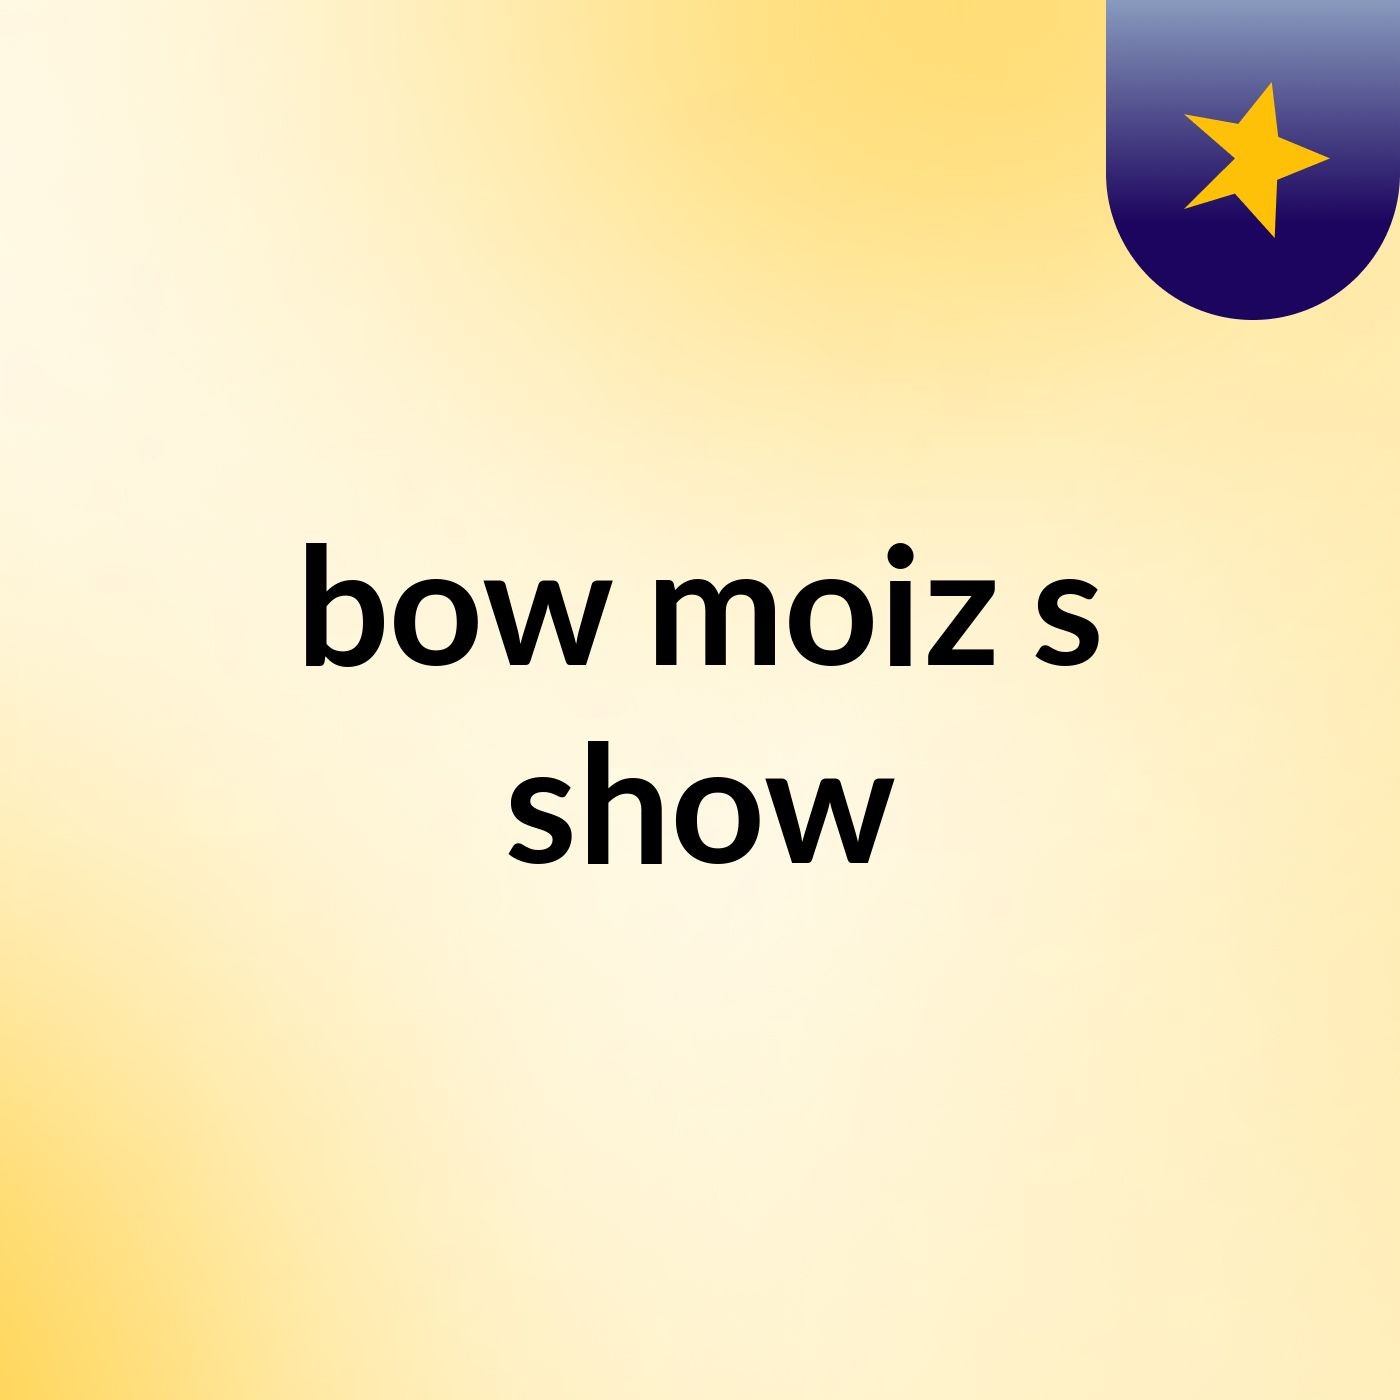 bow moiz's show